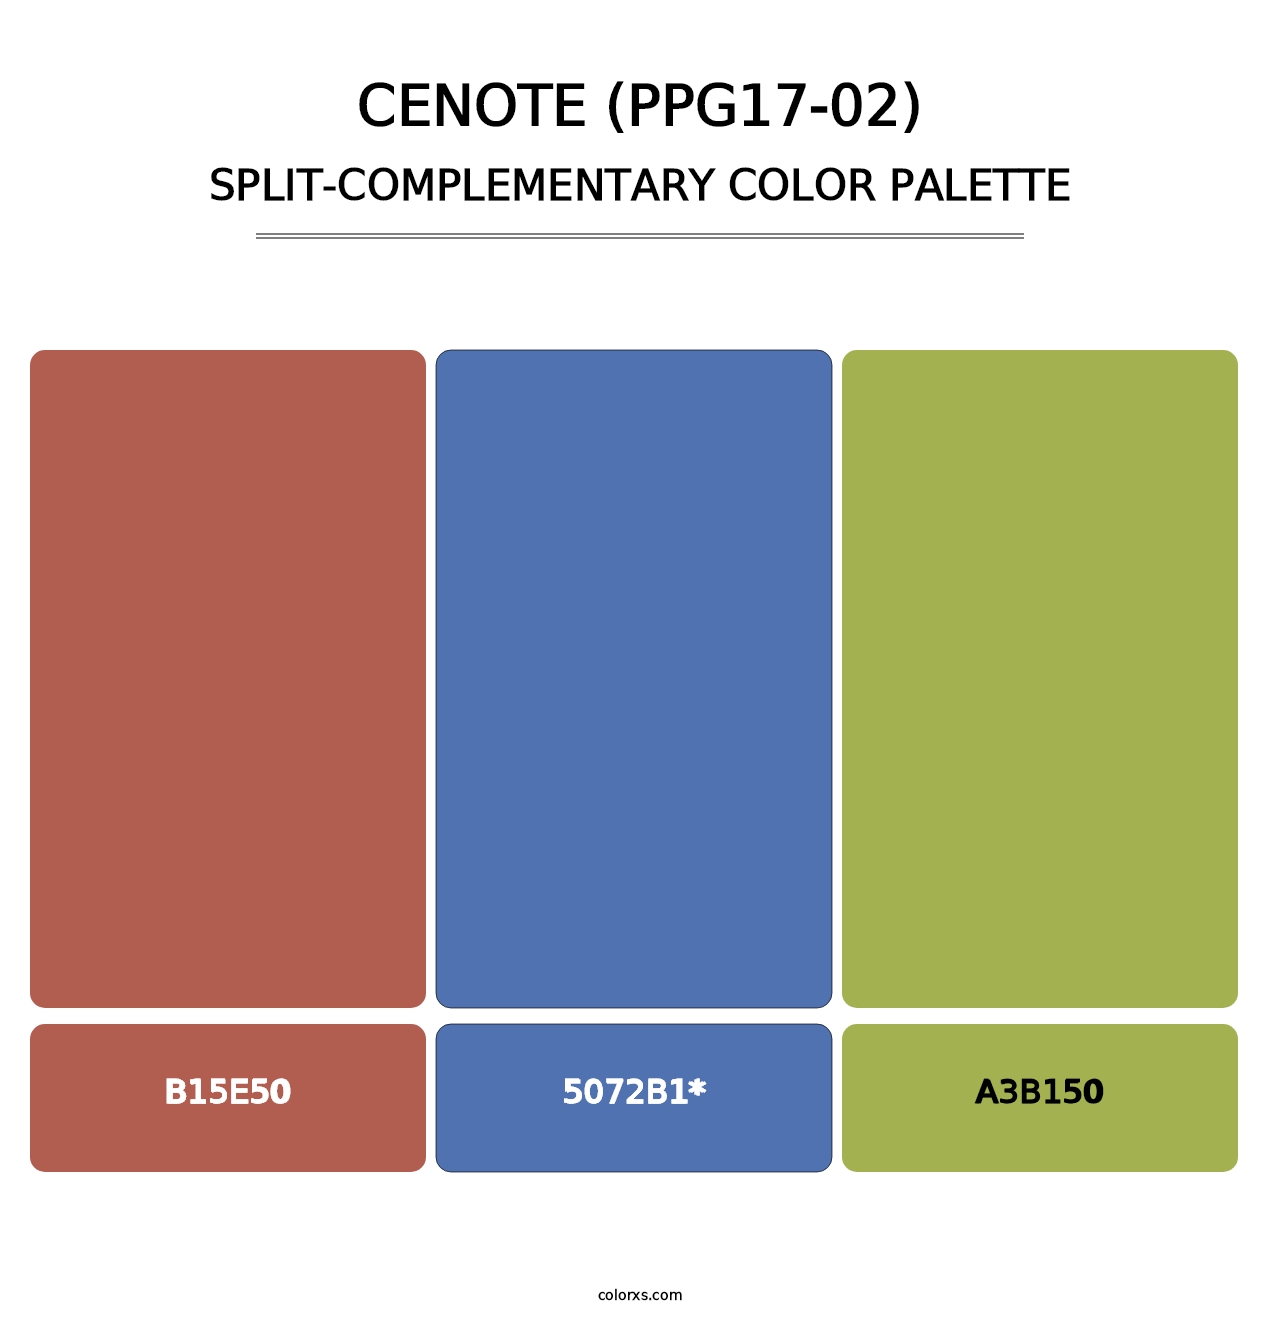 Cenote (PPG17-02) - Split-Complementary Color Palette